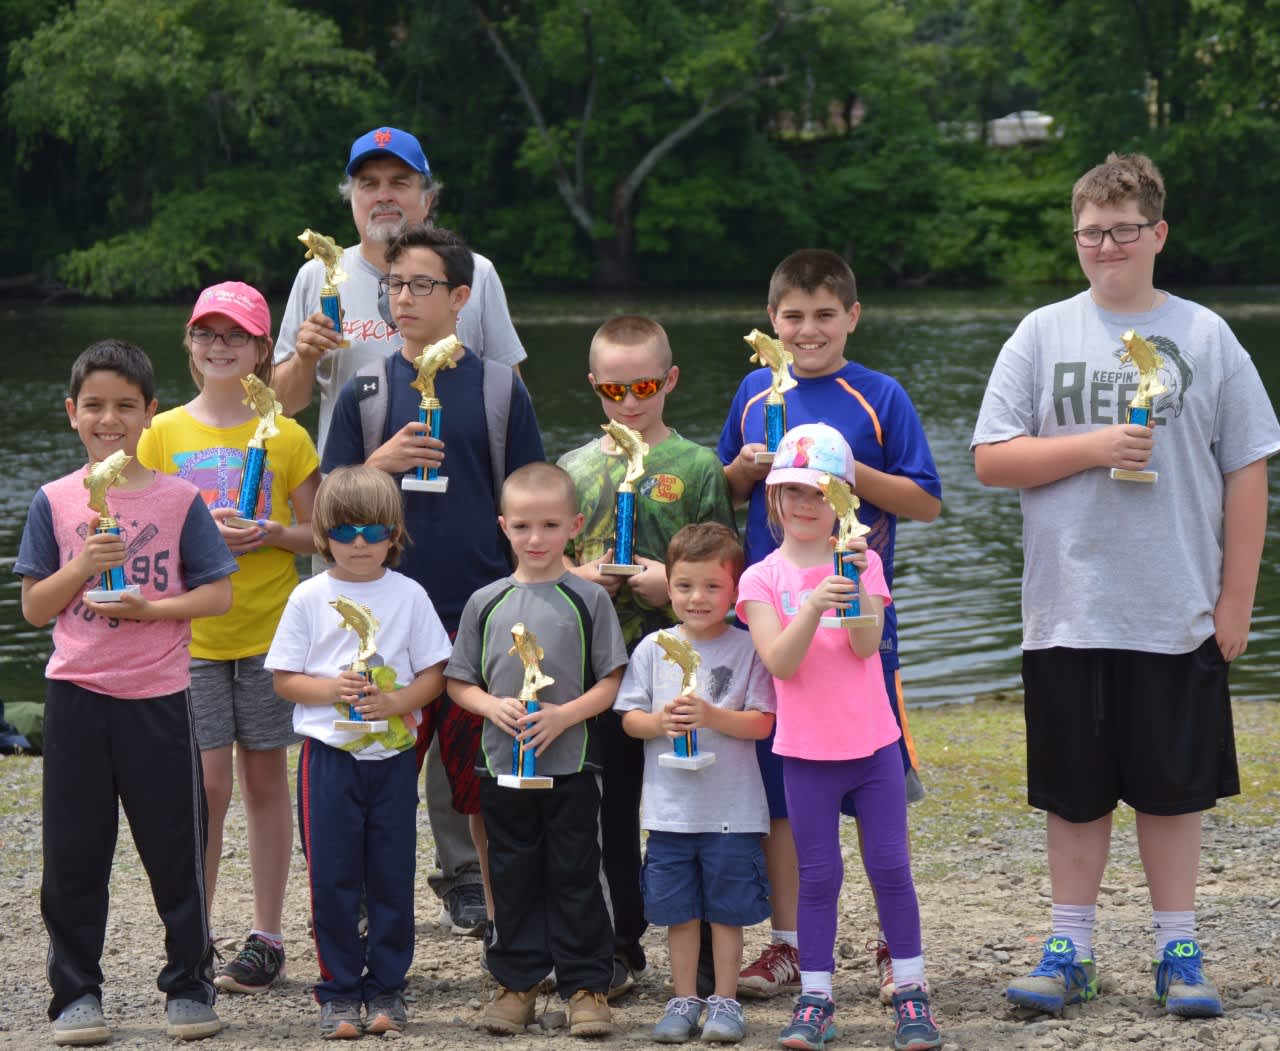 The winners of Elmwood Park's fishing derby